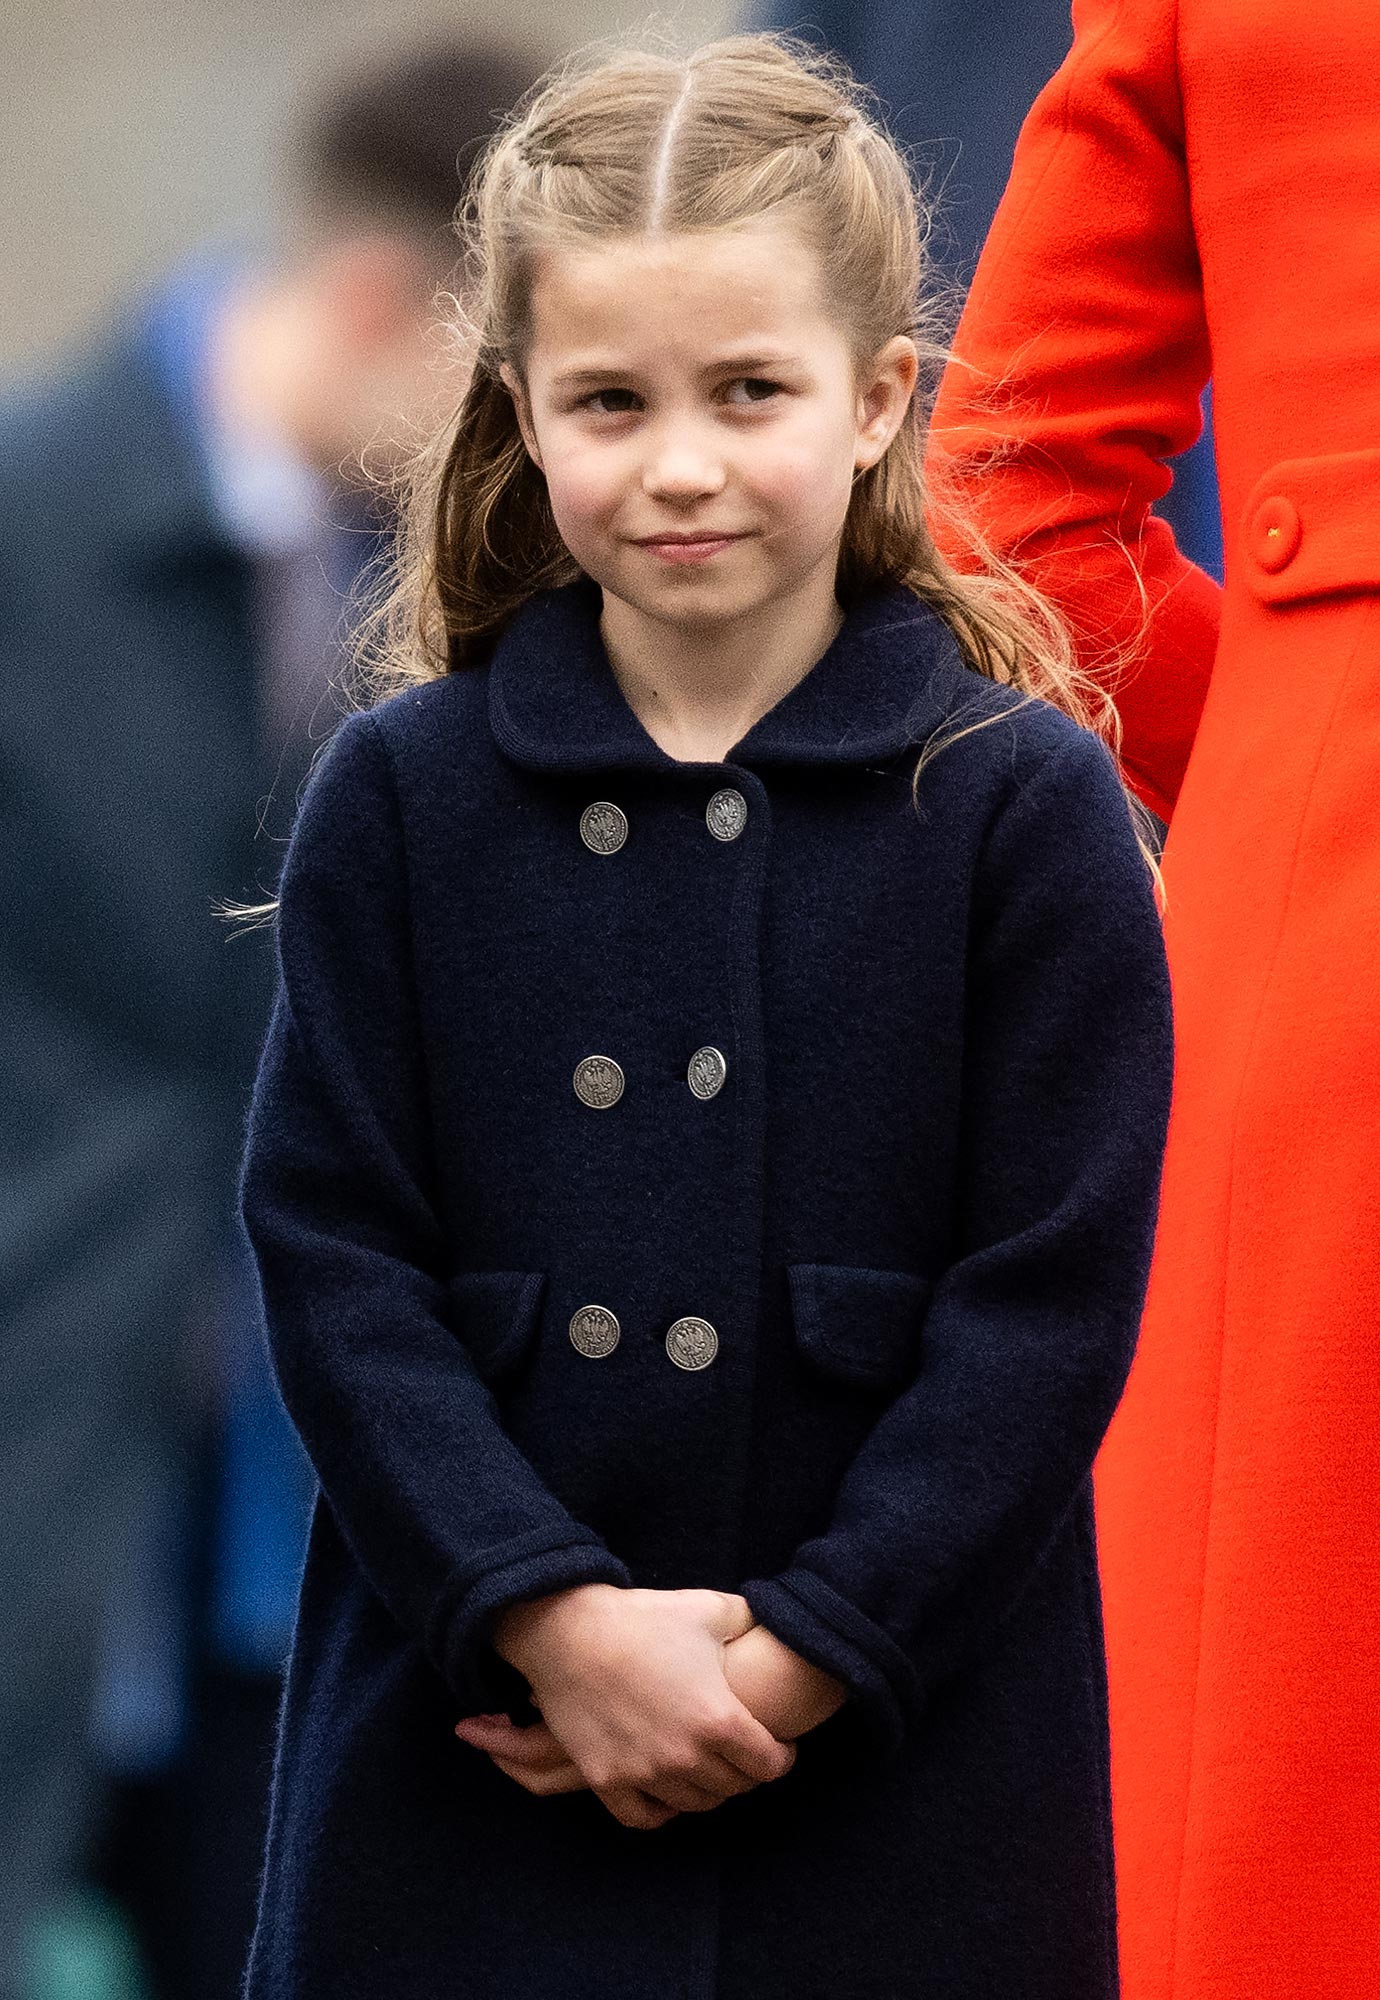 Princess Charlotte Celebrates 9th Birthday With Portrait: ‘TK’